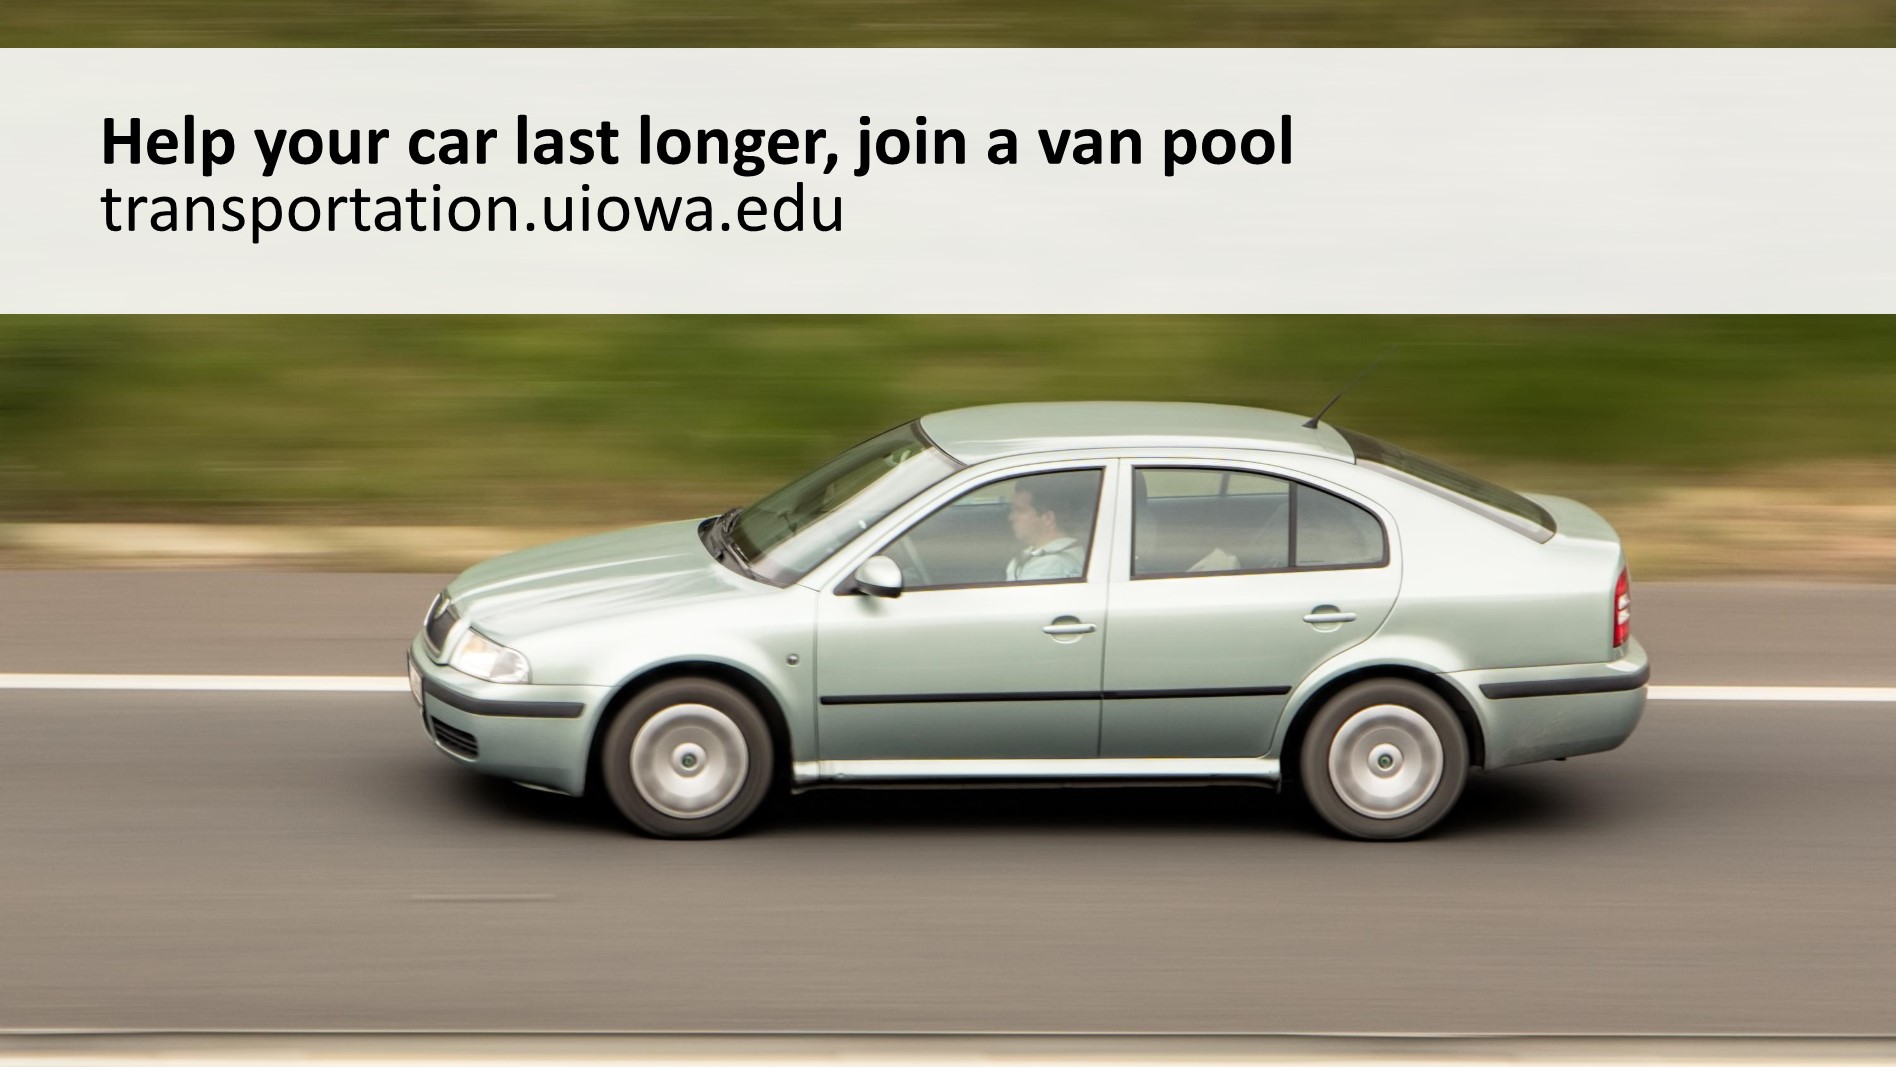 Vanpool helps your car last longer